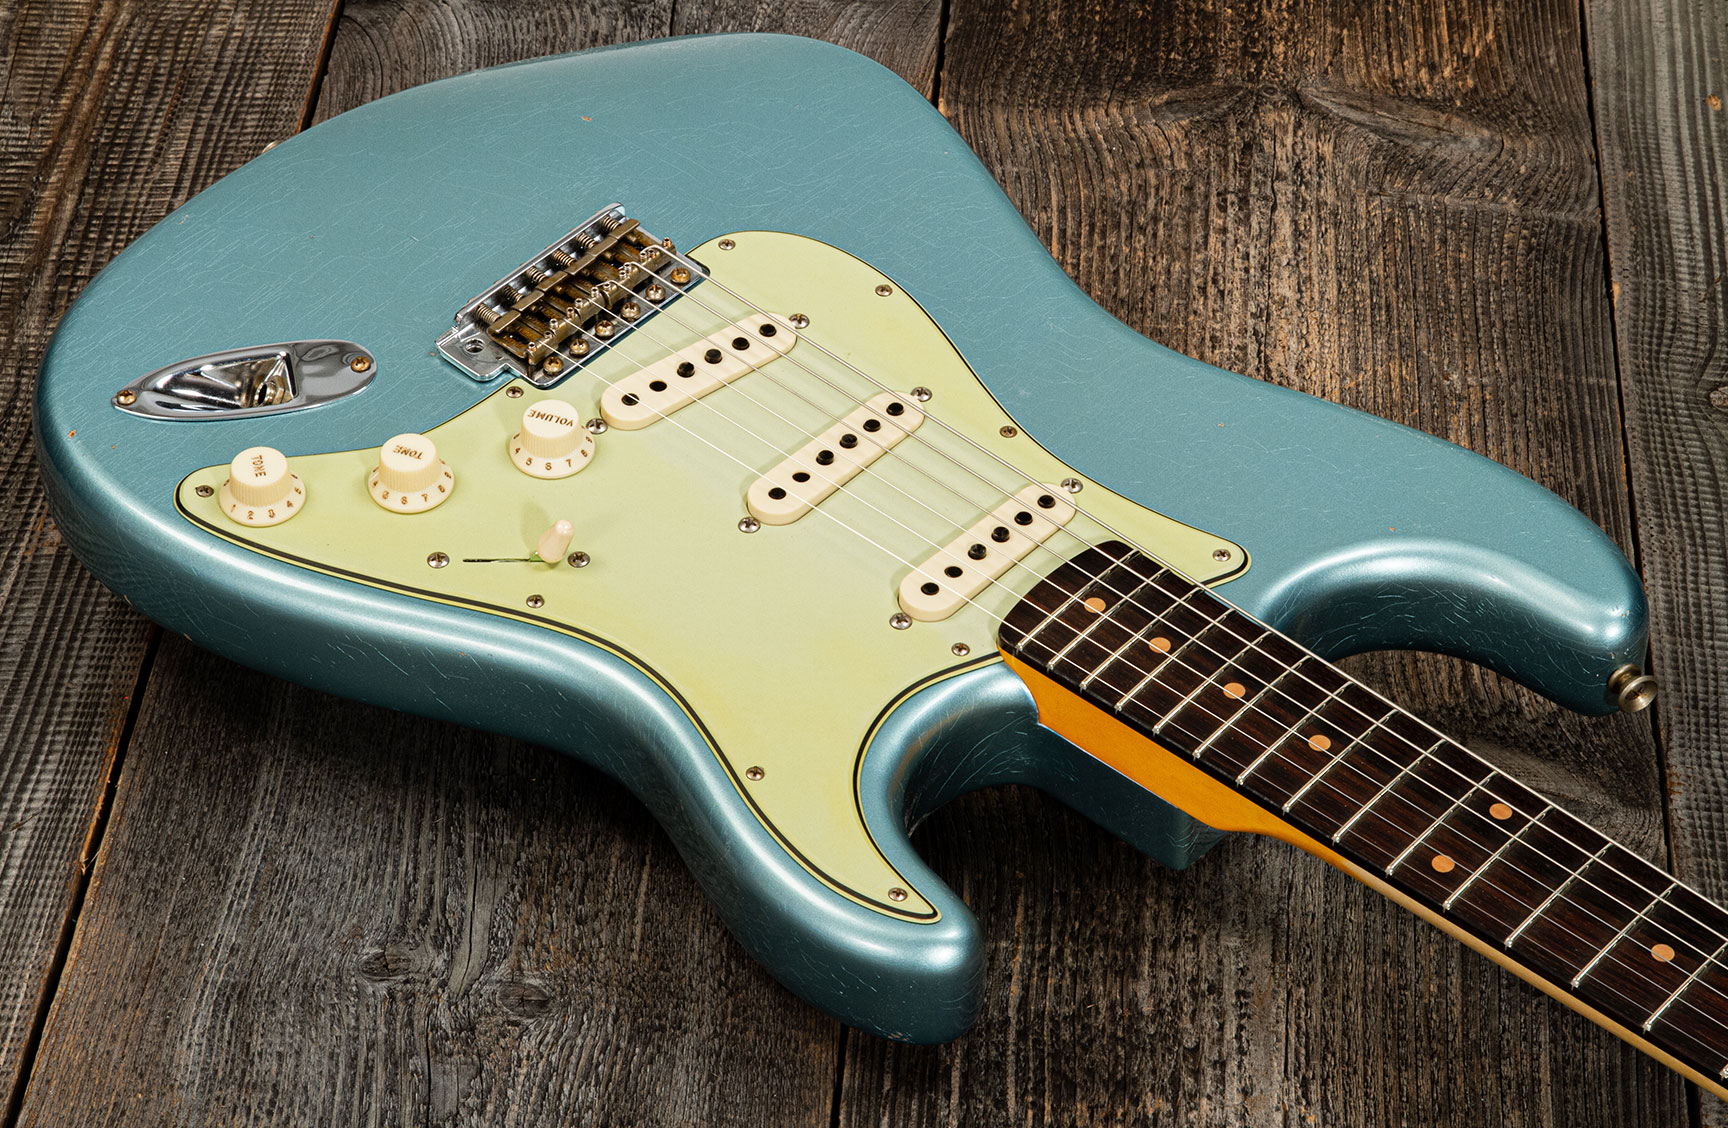 Fender Custom Shop Strat 1959 3s Trem Rw #cz566857 - Journeyman Relic Teal Green Metallic - Guitare Électrique Forme Str - Variation 2